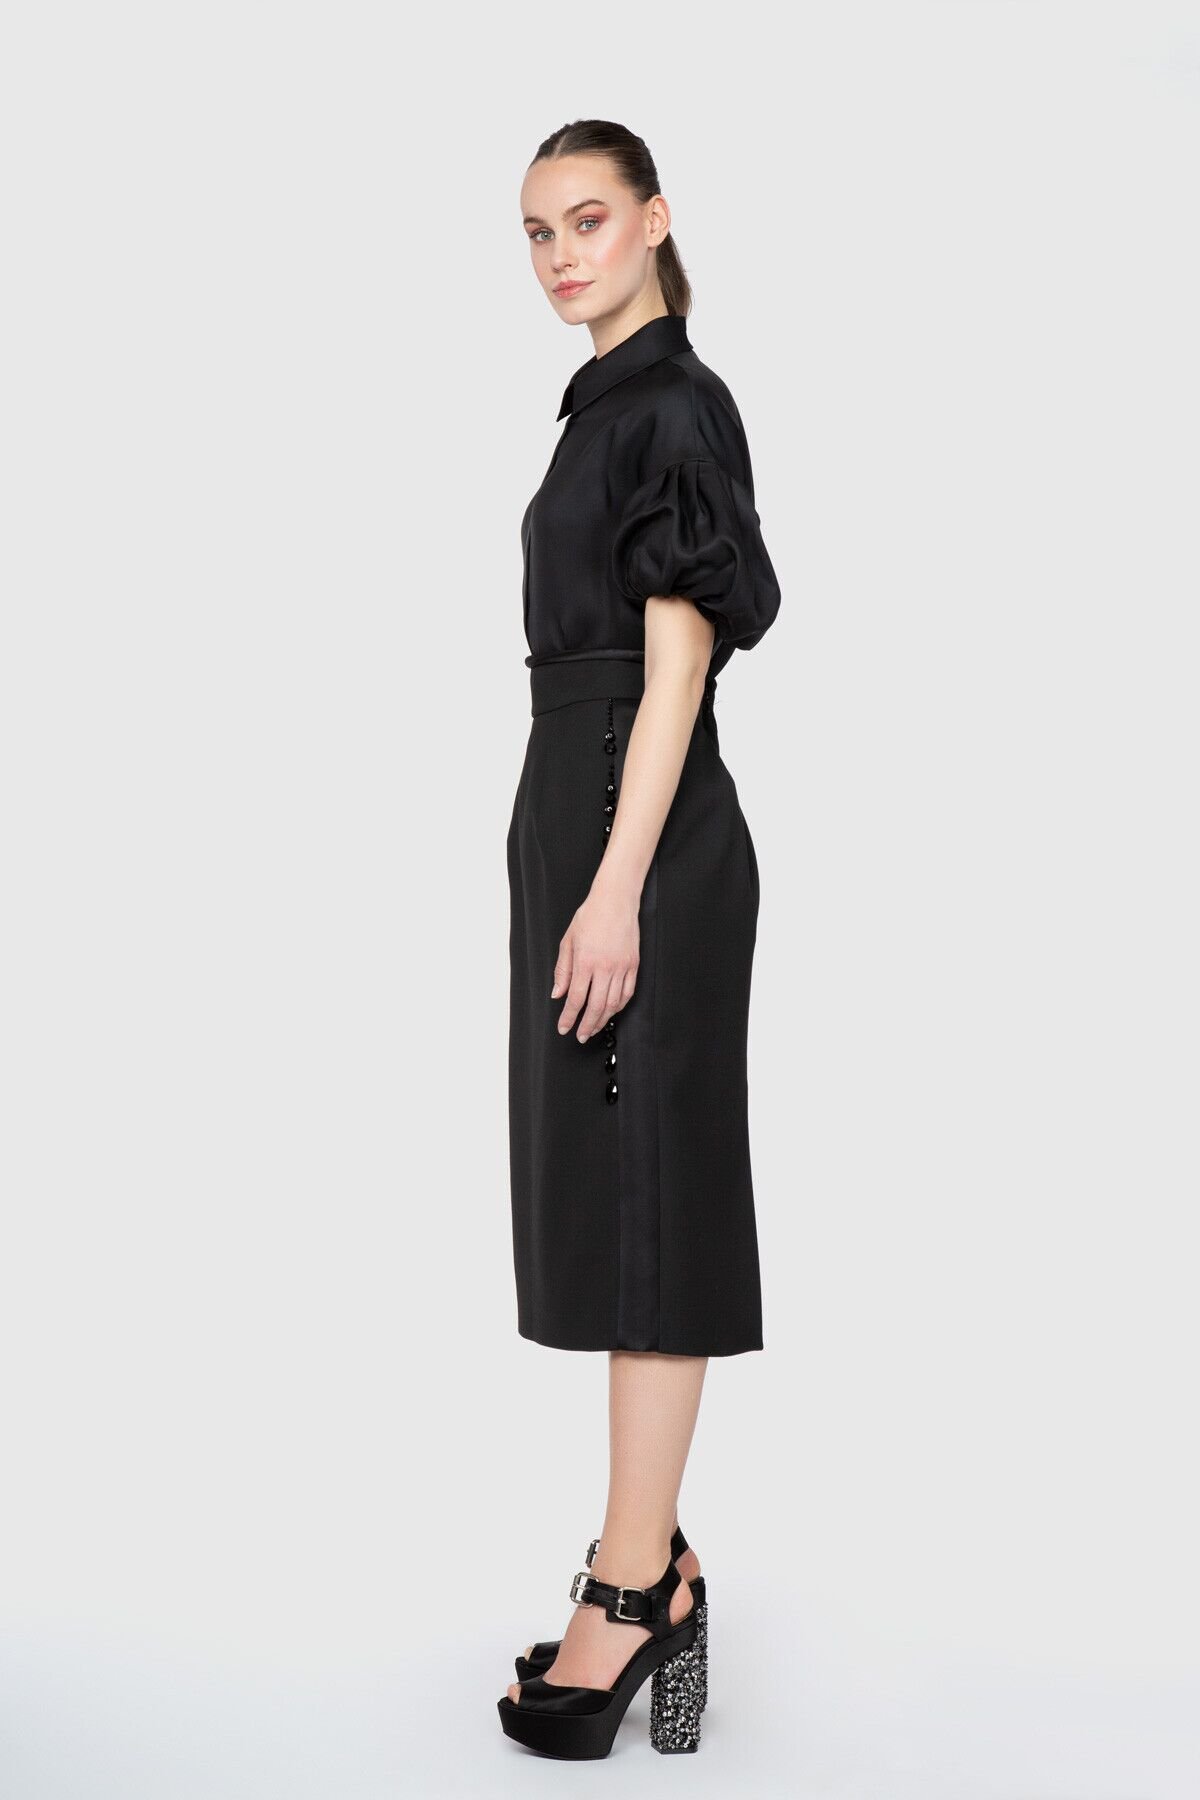 Embroidered Detailed High Waist Black Skirt